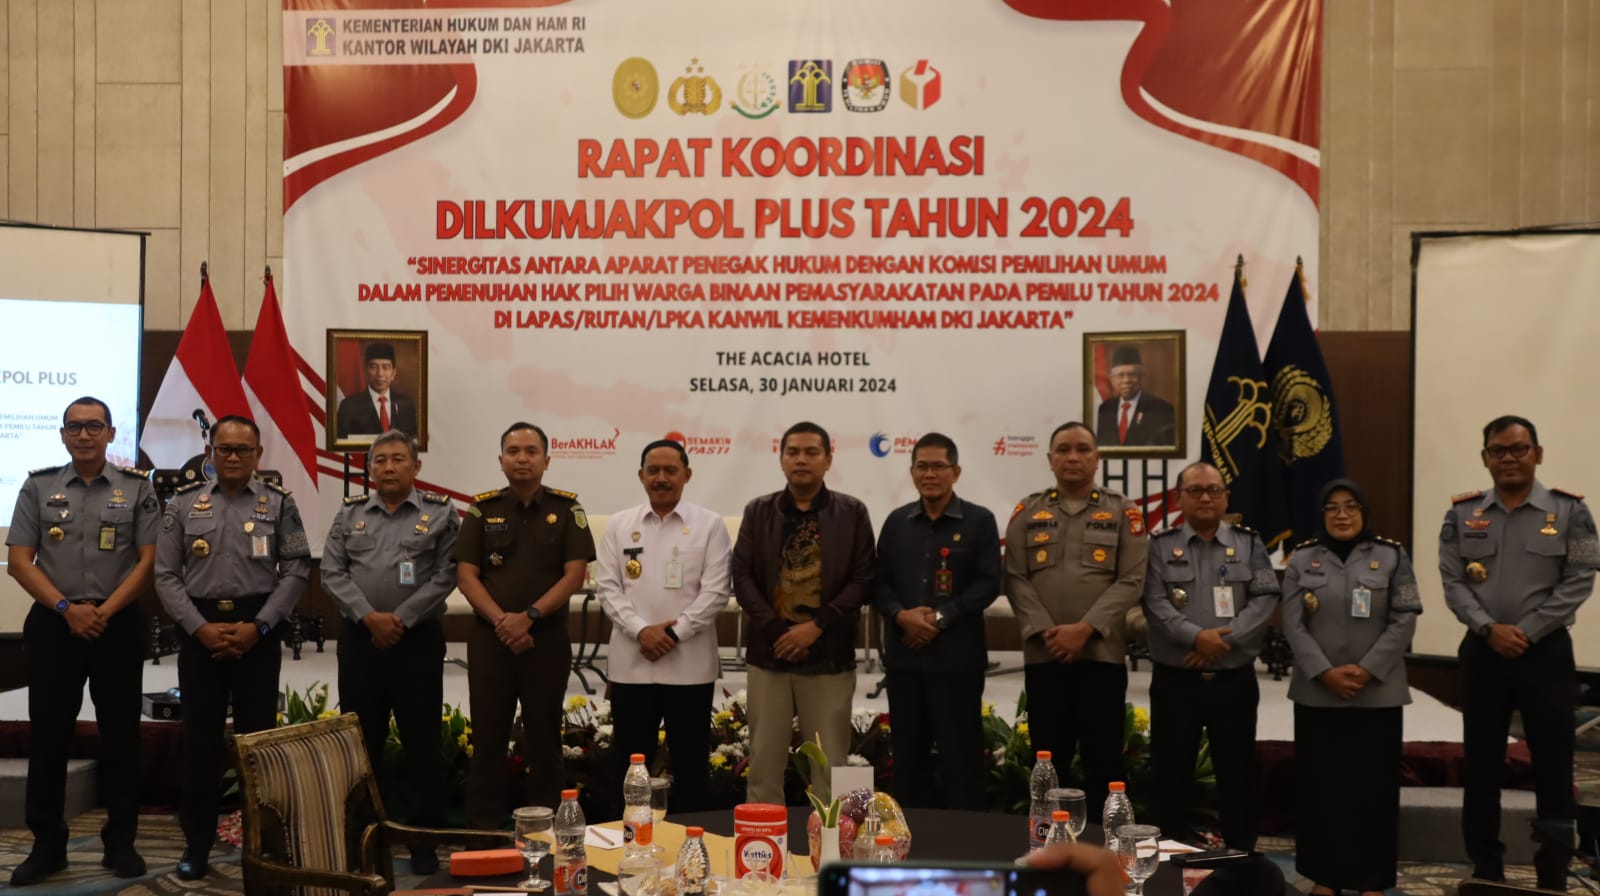 Kanwil Kemenkumham DKI Jakarta Perkuat Komitmen Guna Sukseskan  Penyelenggaraan Pemilu Tahun 2024 Melalui Rapat Koordinasi Dilkumjakpol Plus